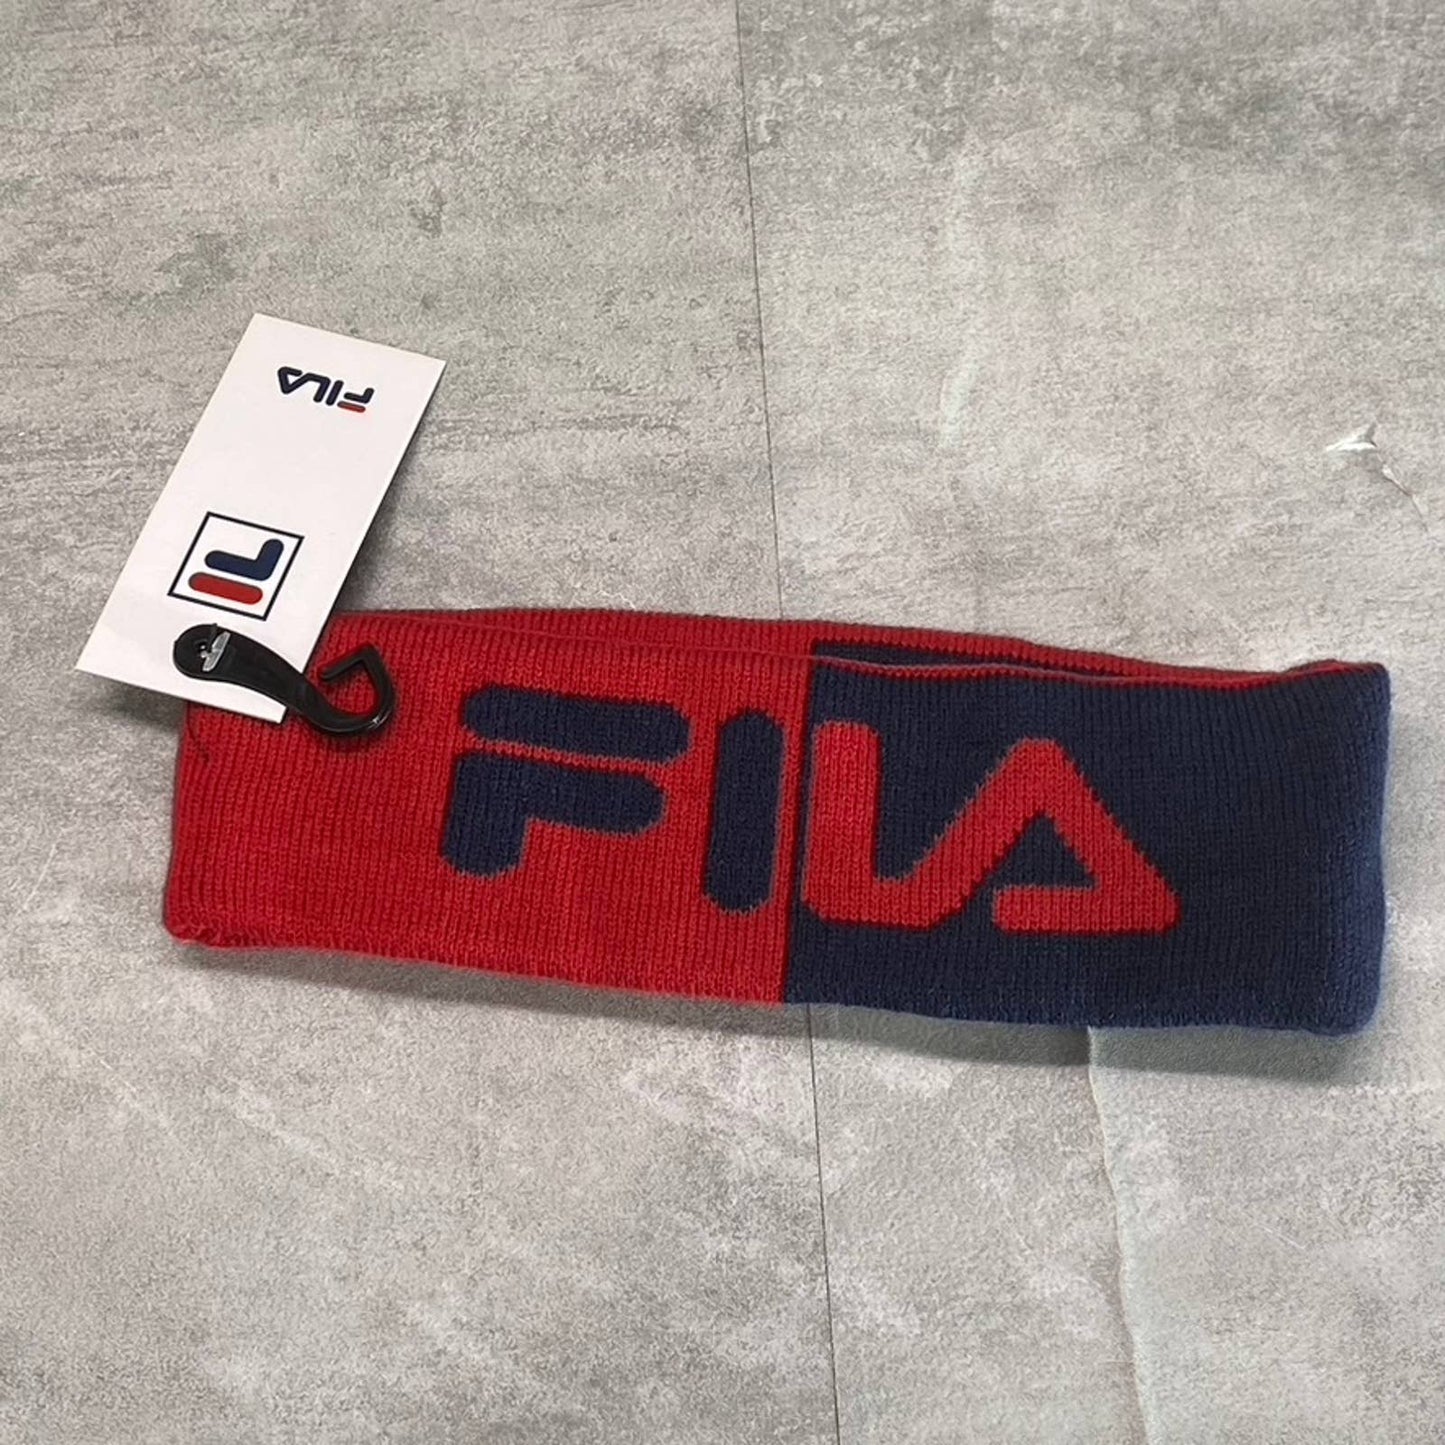 FILA Unisex Navy-Red Logo Headband SZ OS